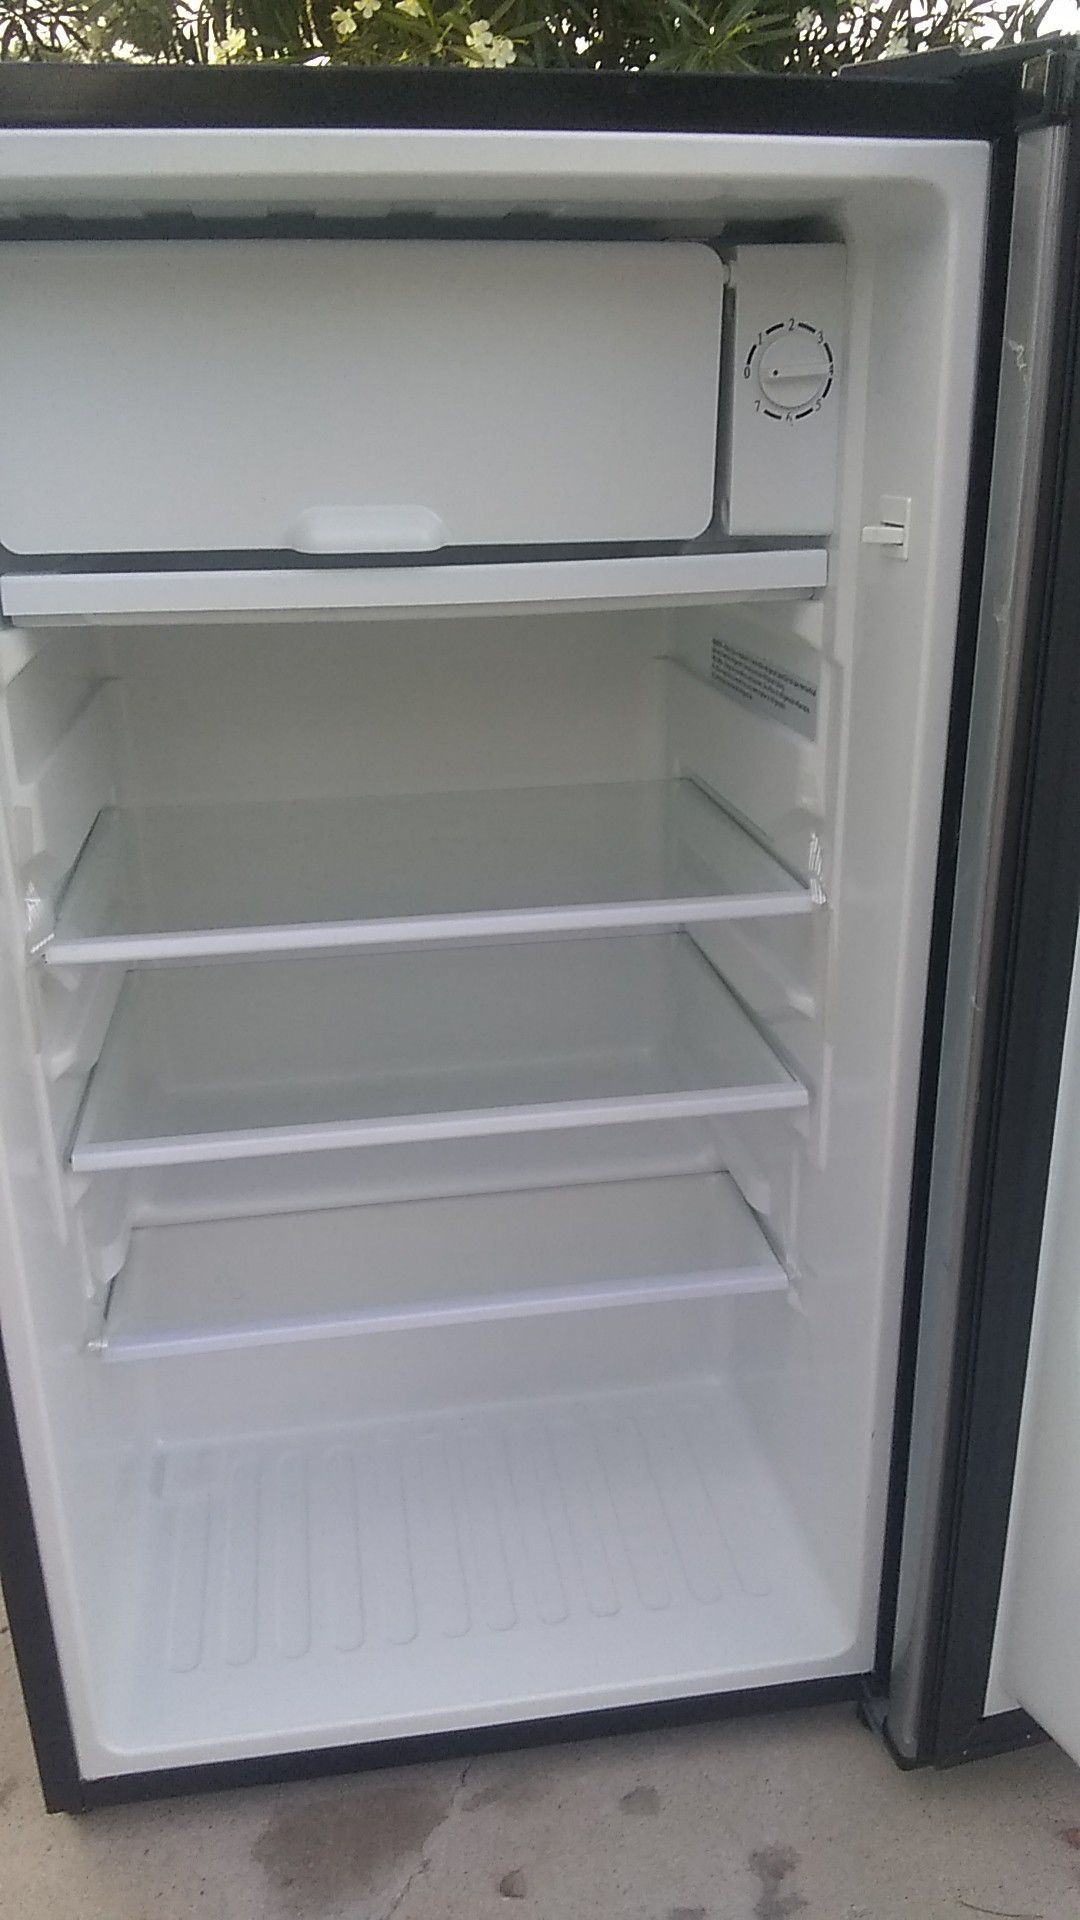 Magic Chef upright freezer and refrigerator